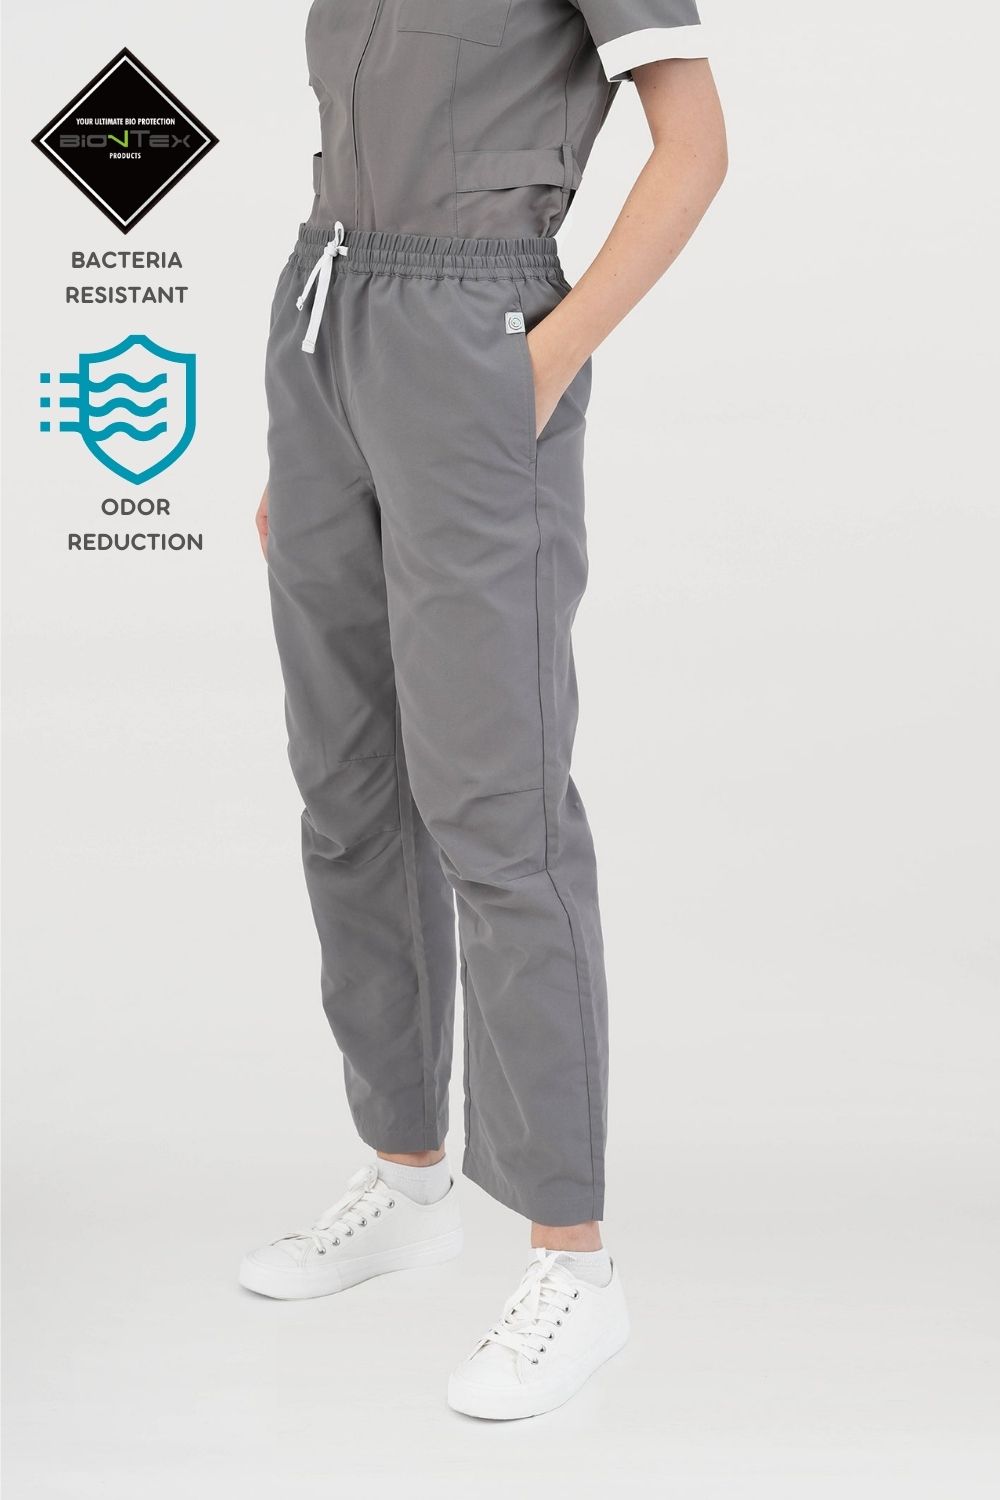 Women's BioNTex™ Scrub Pants with Contrast String